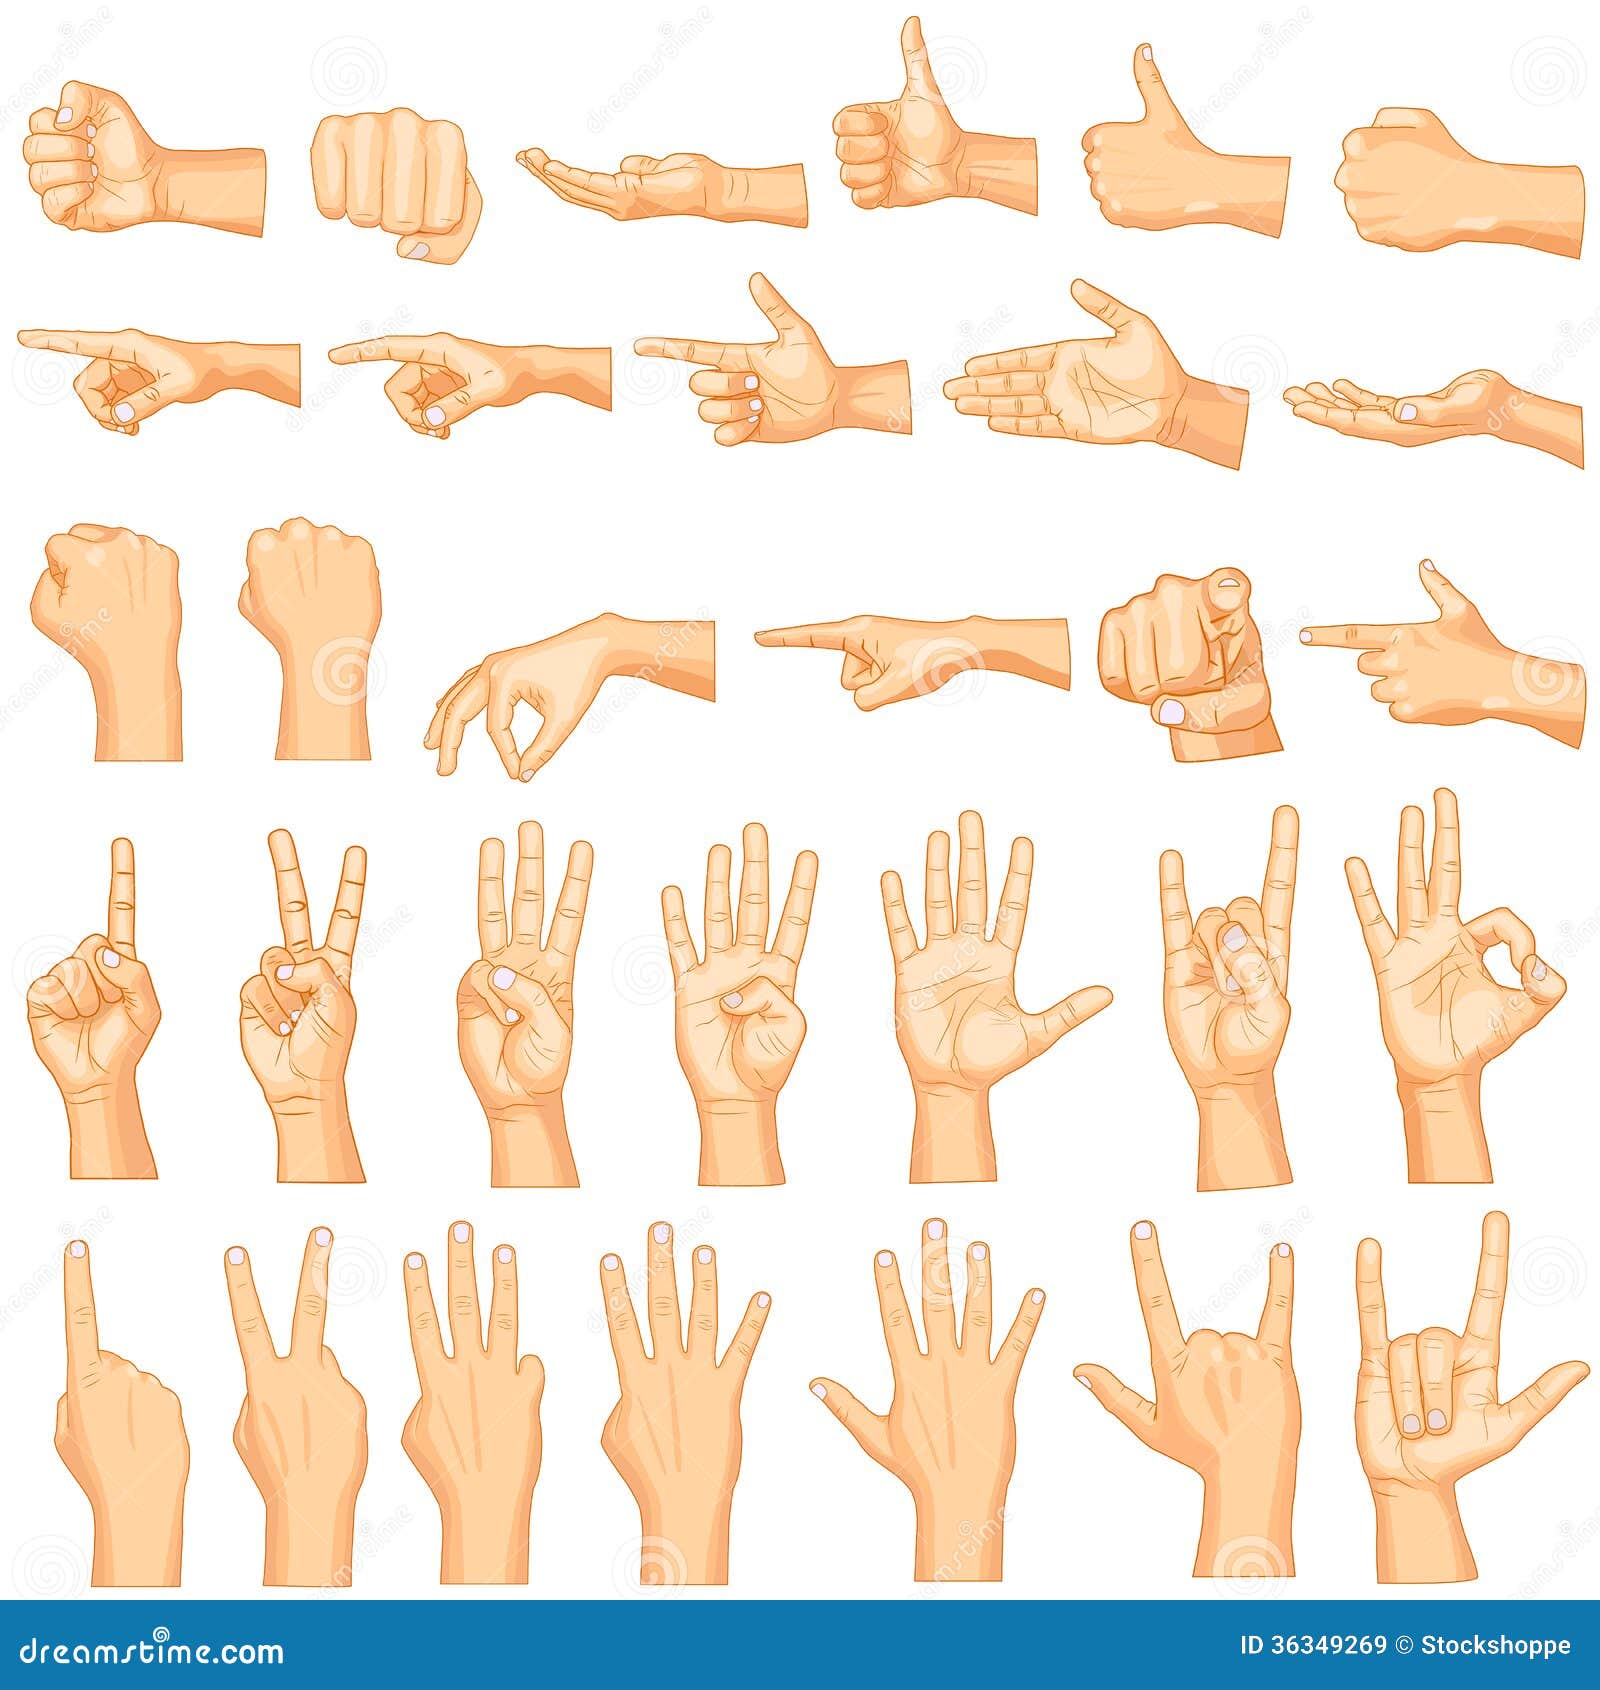 D Hands Gestures Set Cartoon Render Vector Illustration Hands Poses